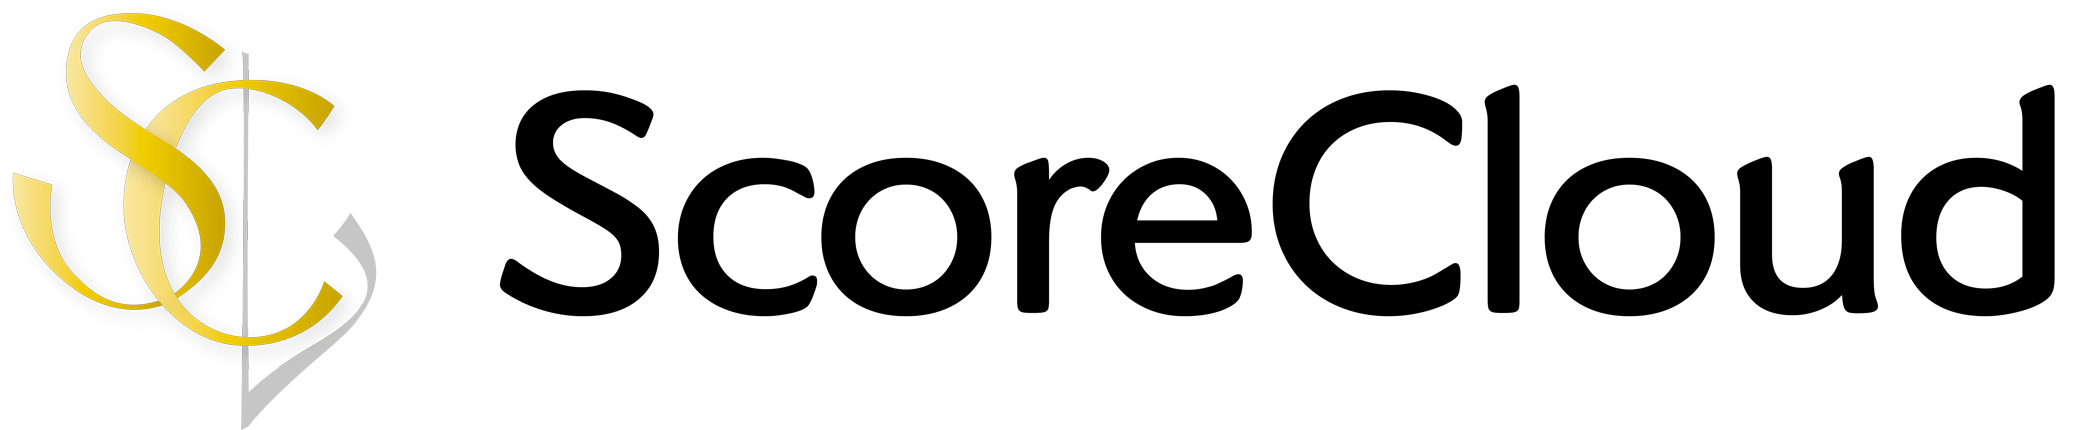 ScoreCloud Logo Text